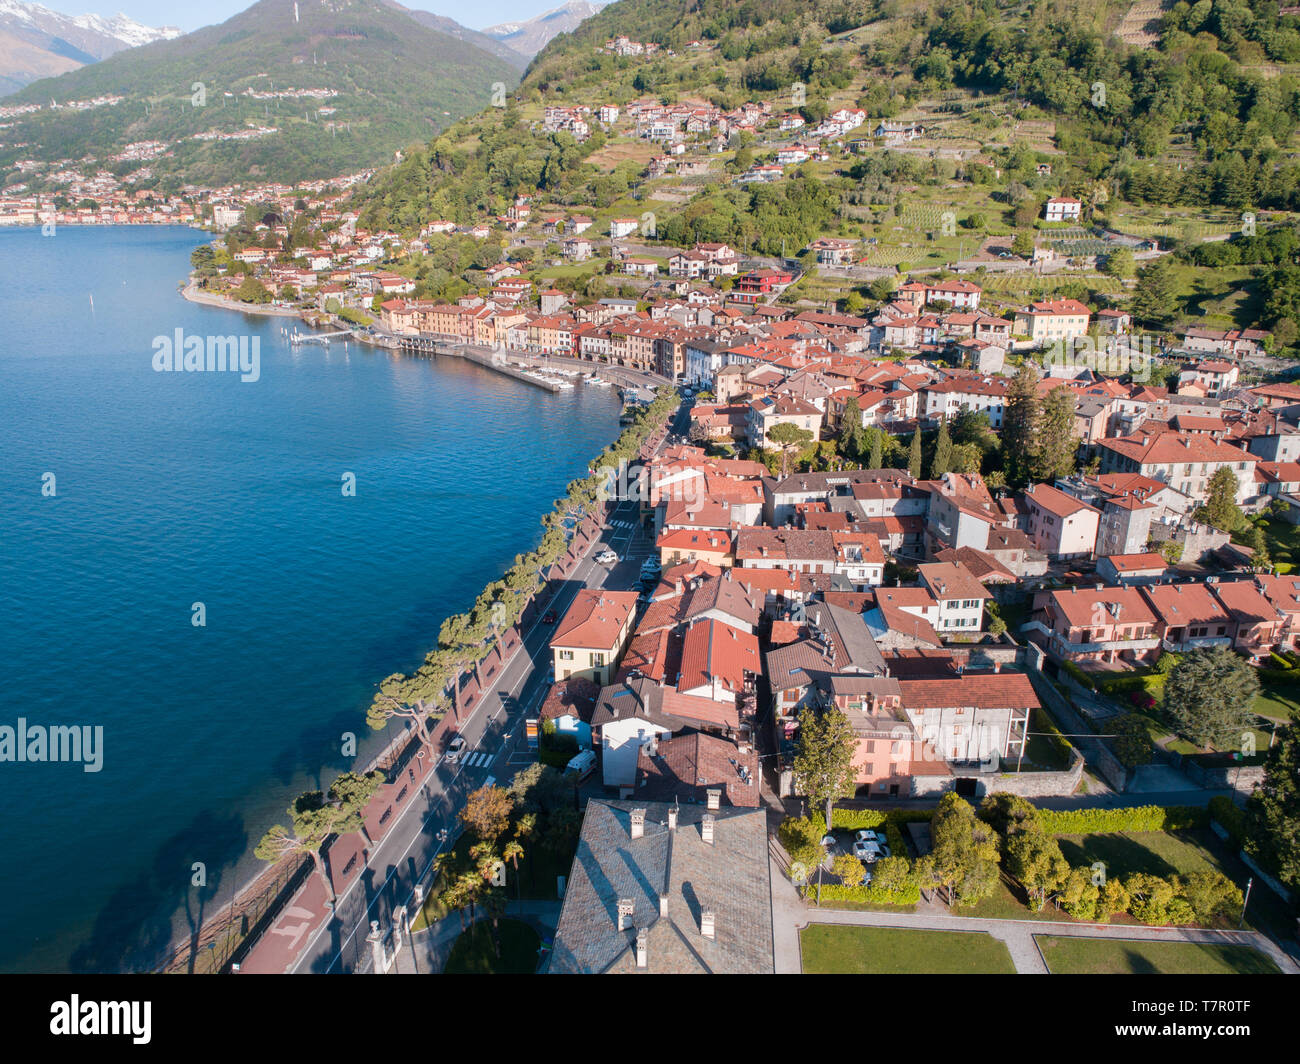 Village of Domaso, Como lake. Italy Stock Photo